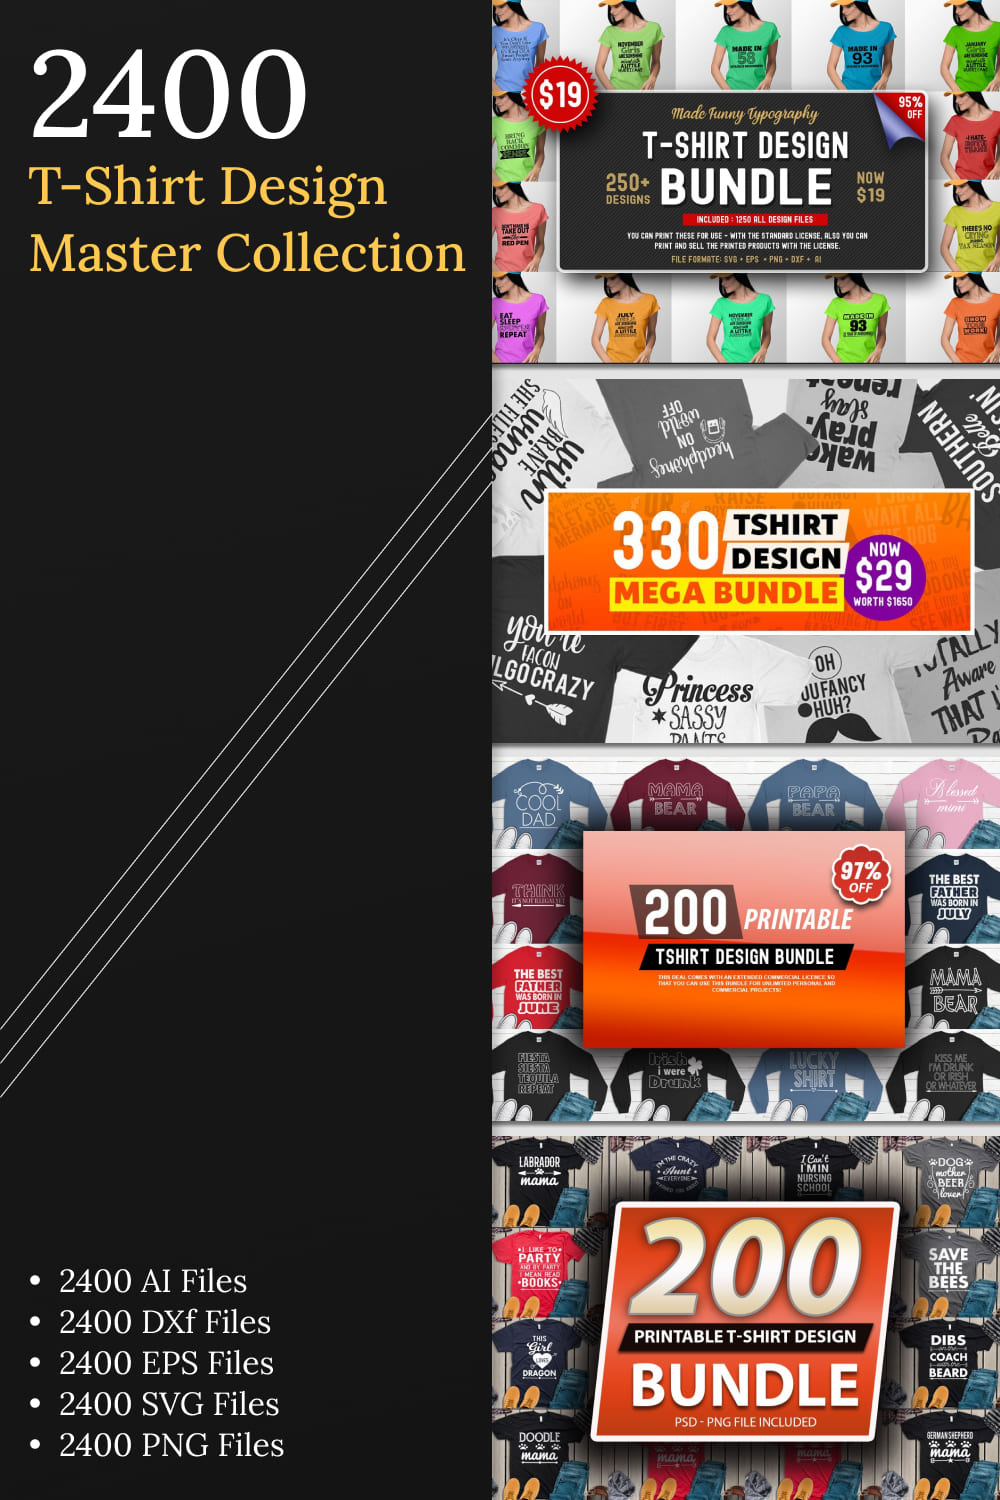 2400 tshirt design master collection 02